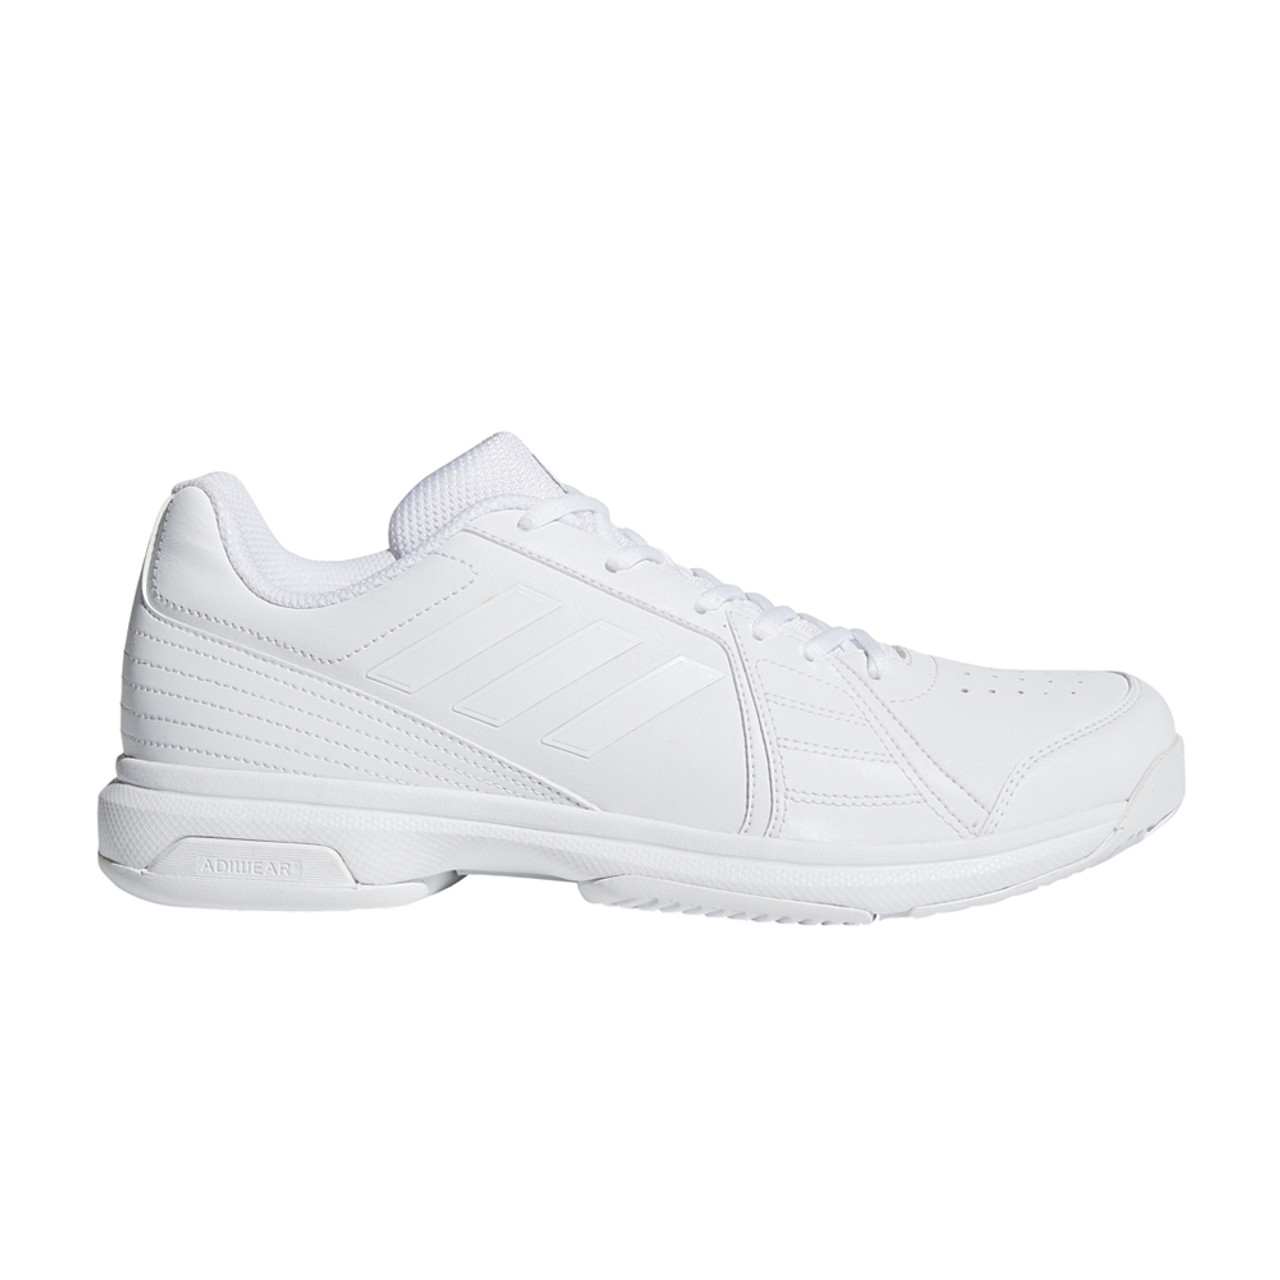 Adidas Men's Approach Tennis Shoe - White | Discount Adidas Men's Athletic  Shoes & More - Shoolu.com | Shoolu.com